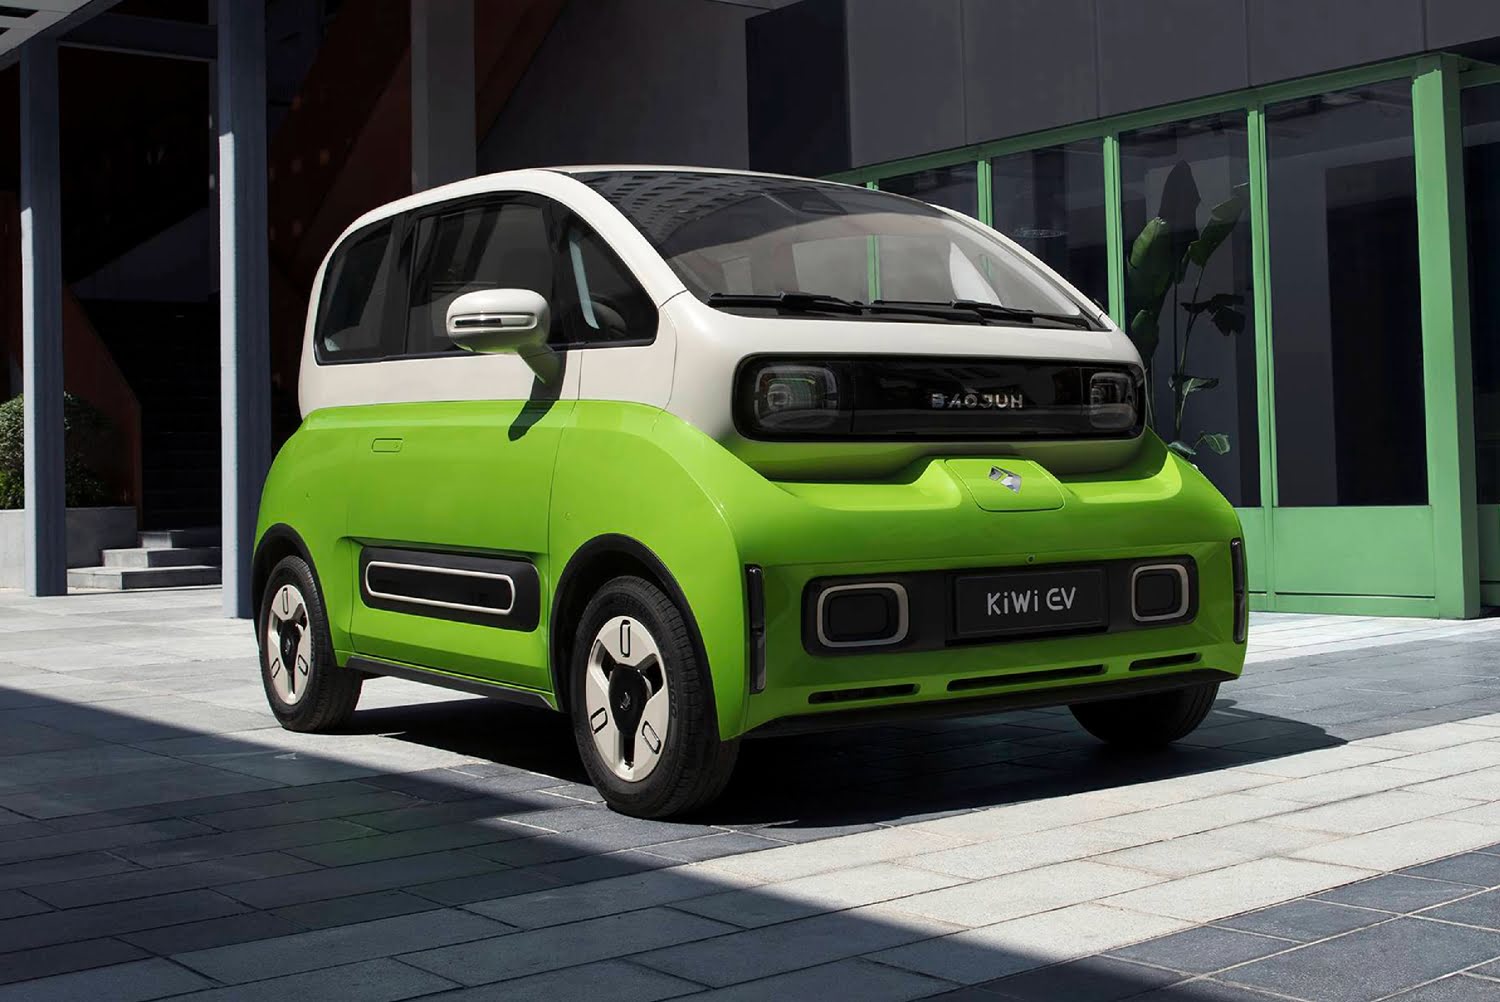 GM’s All-New Baojun KiWi EV Driving Range Announced